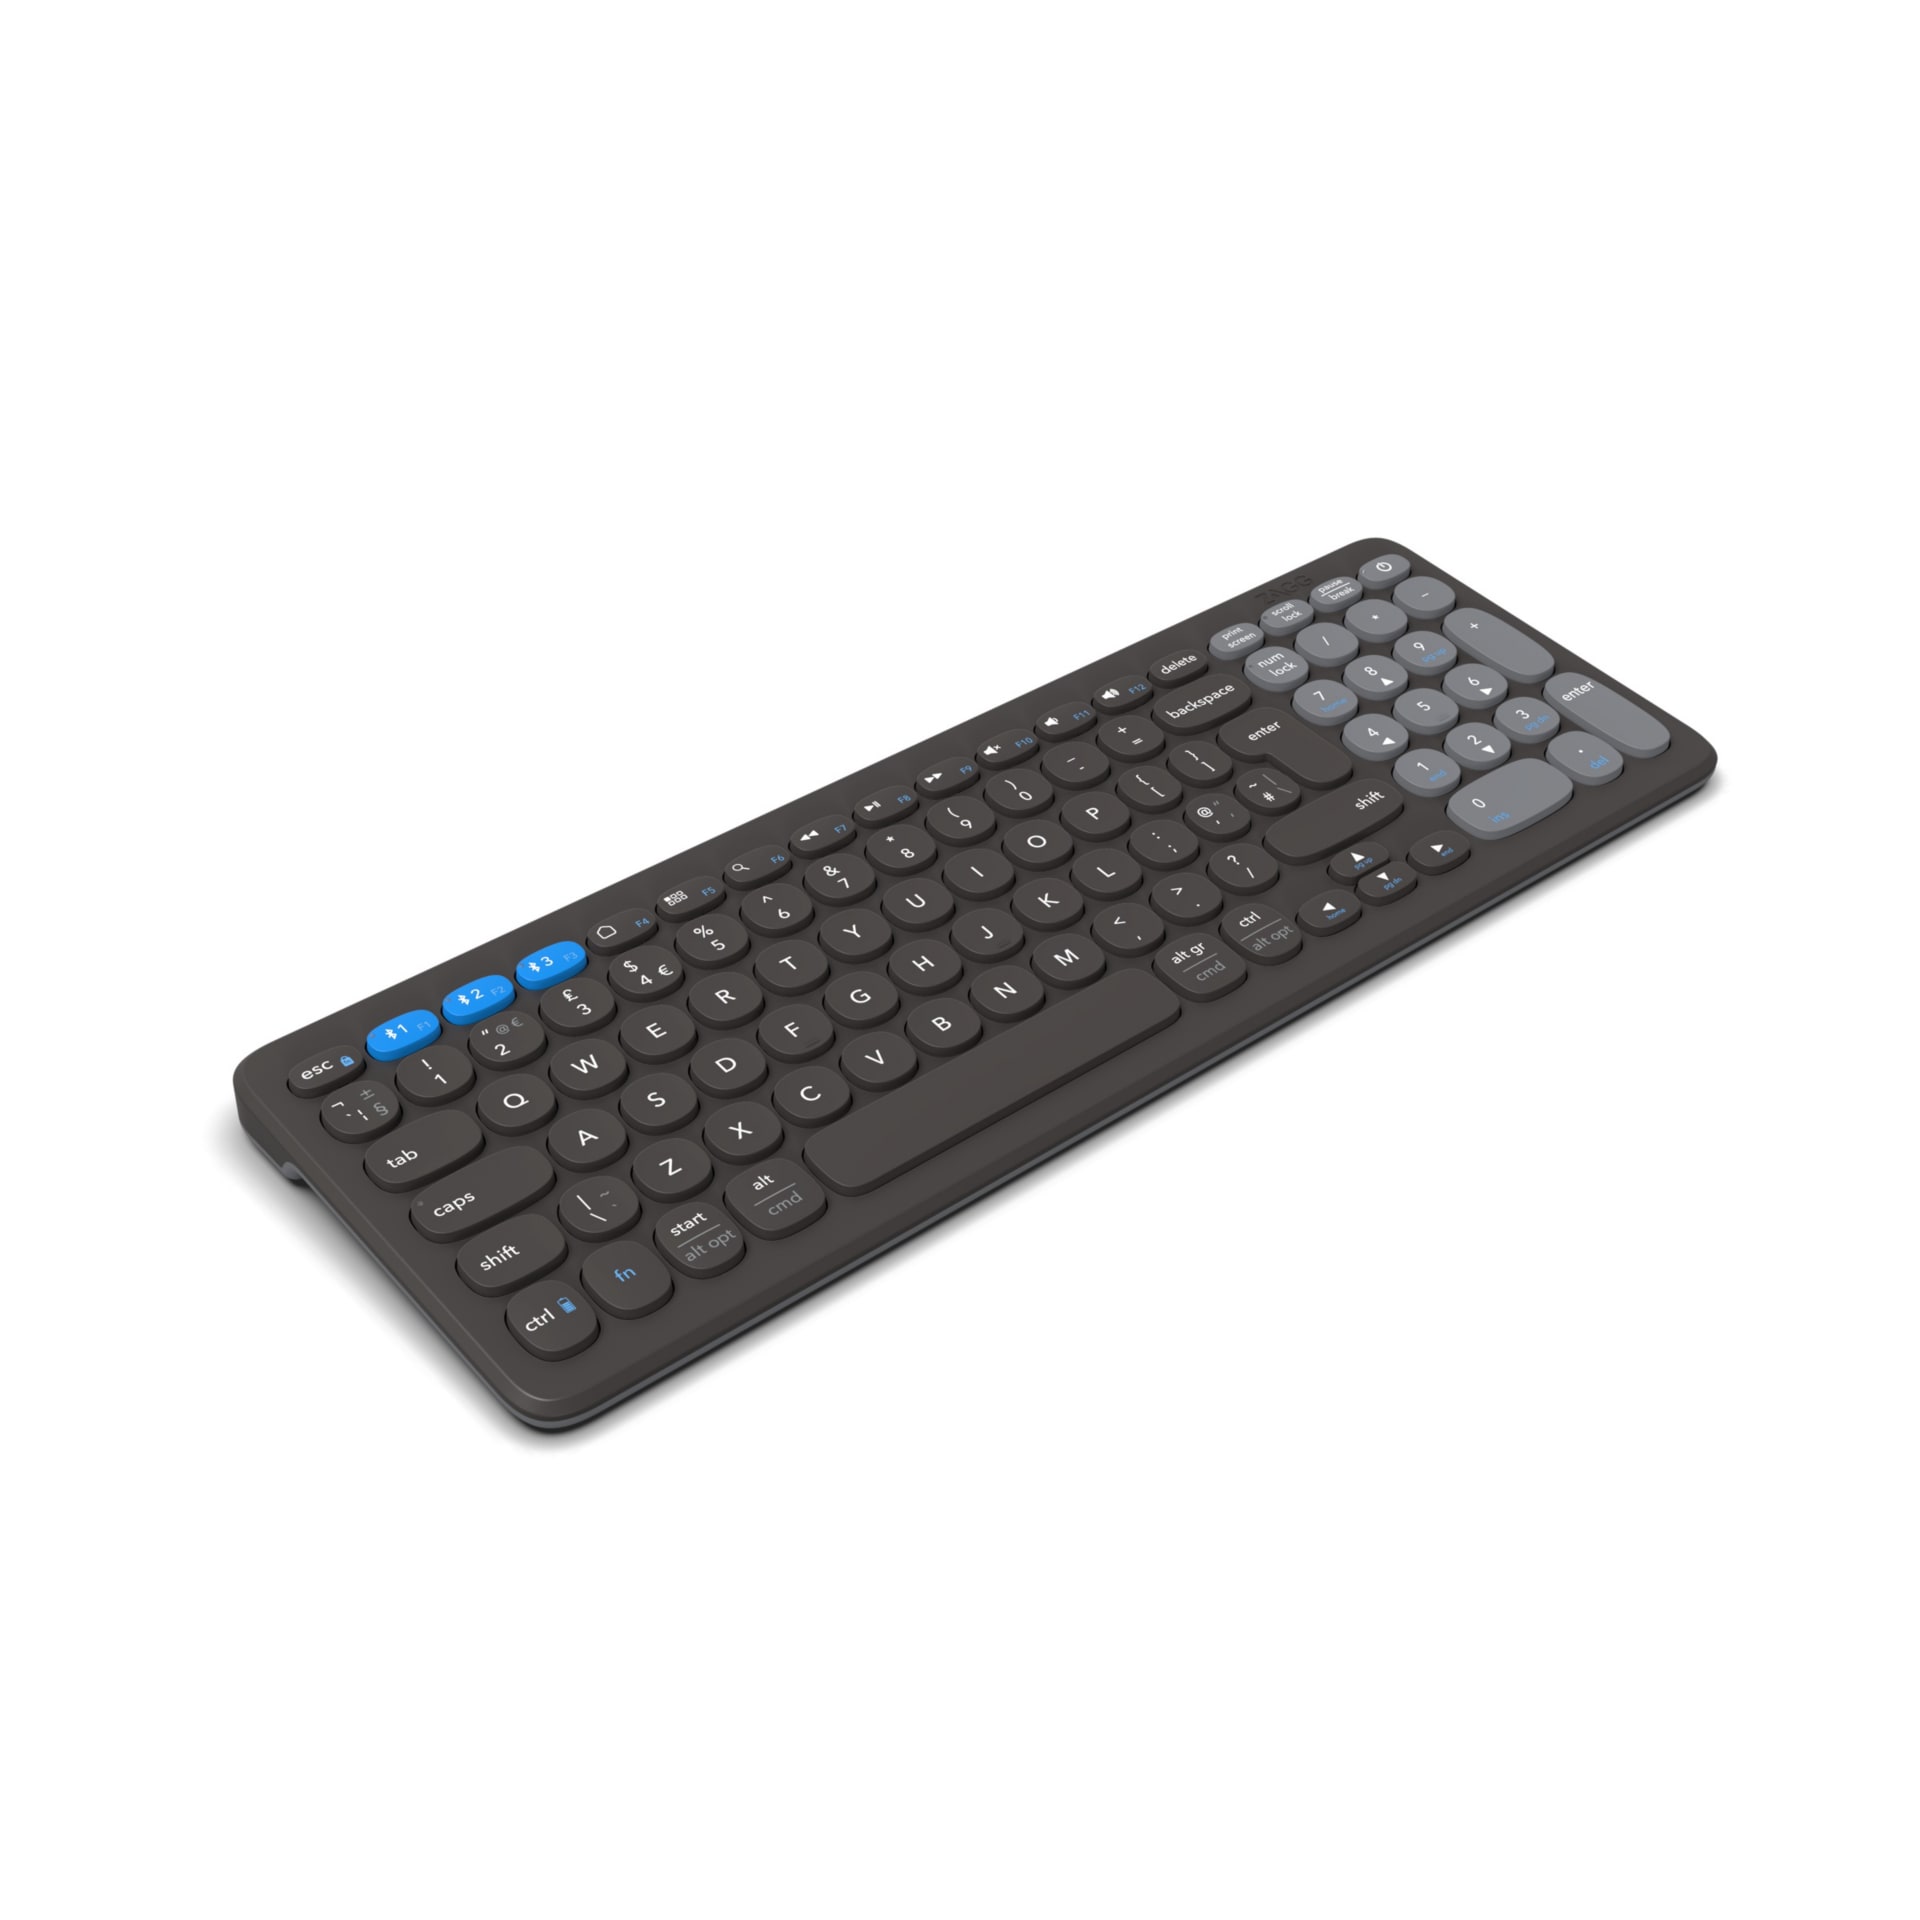 ZAGG Pro Keyboard 15 Multi-pairing Full-Size Keyboard with Wireless Charging